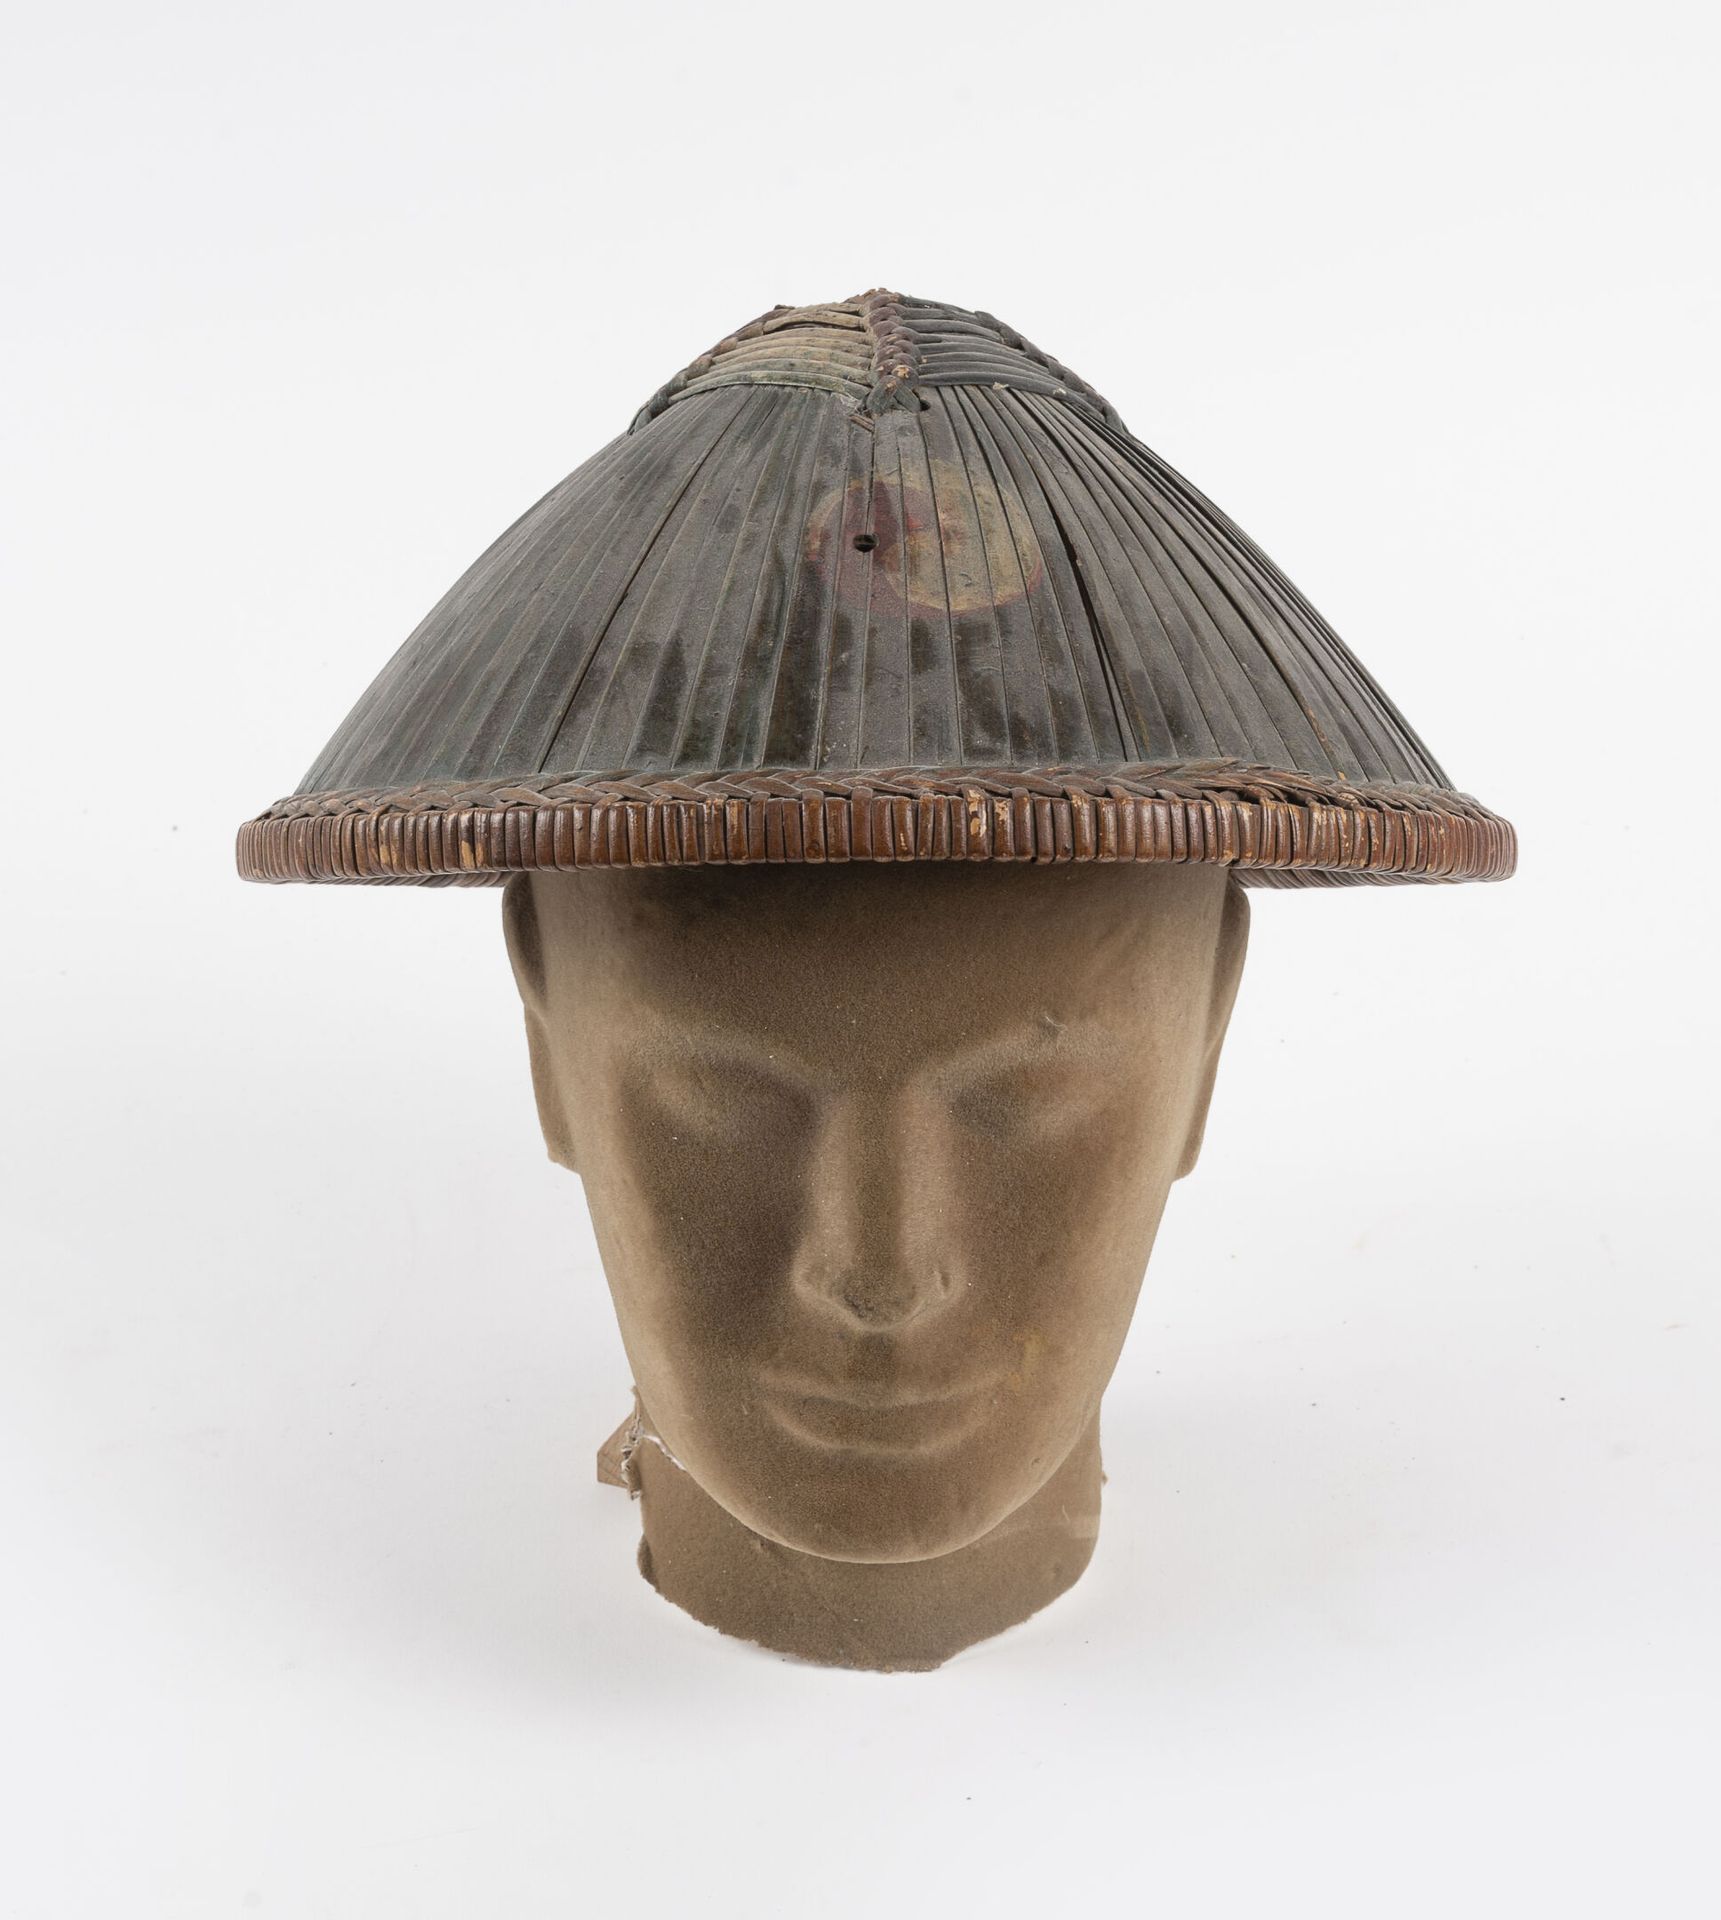 Null 用竹板条制成的韩国头盔，上面画有阴阳标志。

韩国营的纪念品 ?